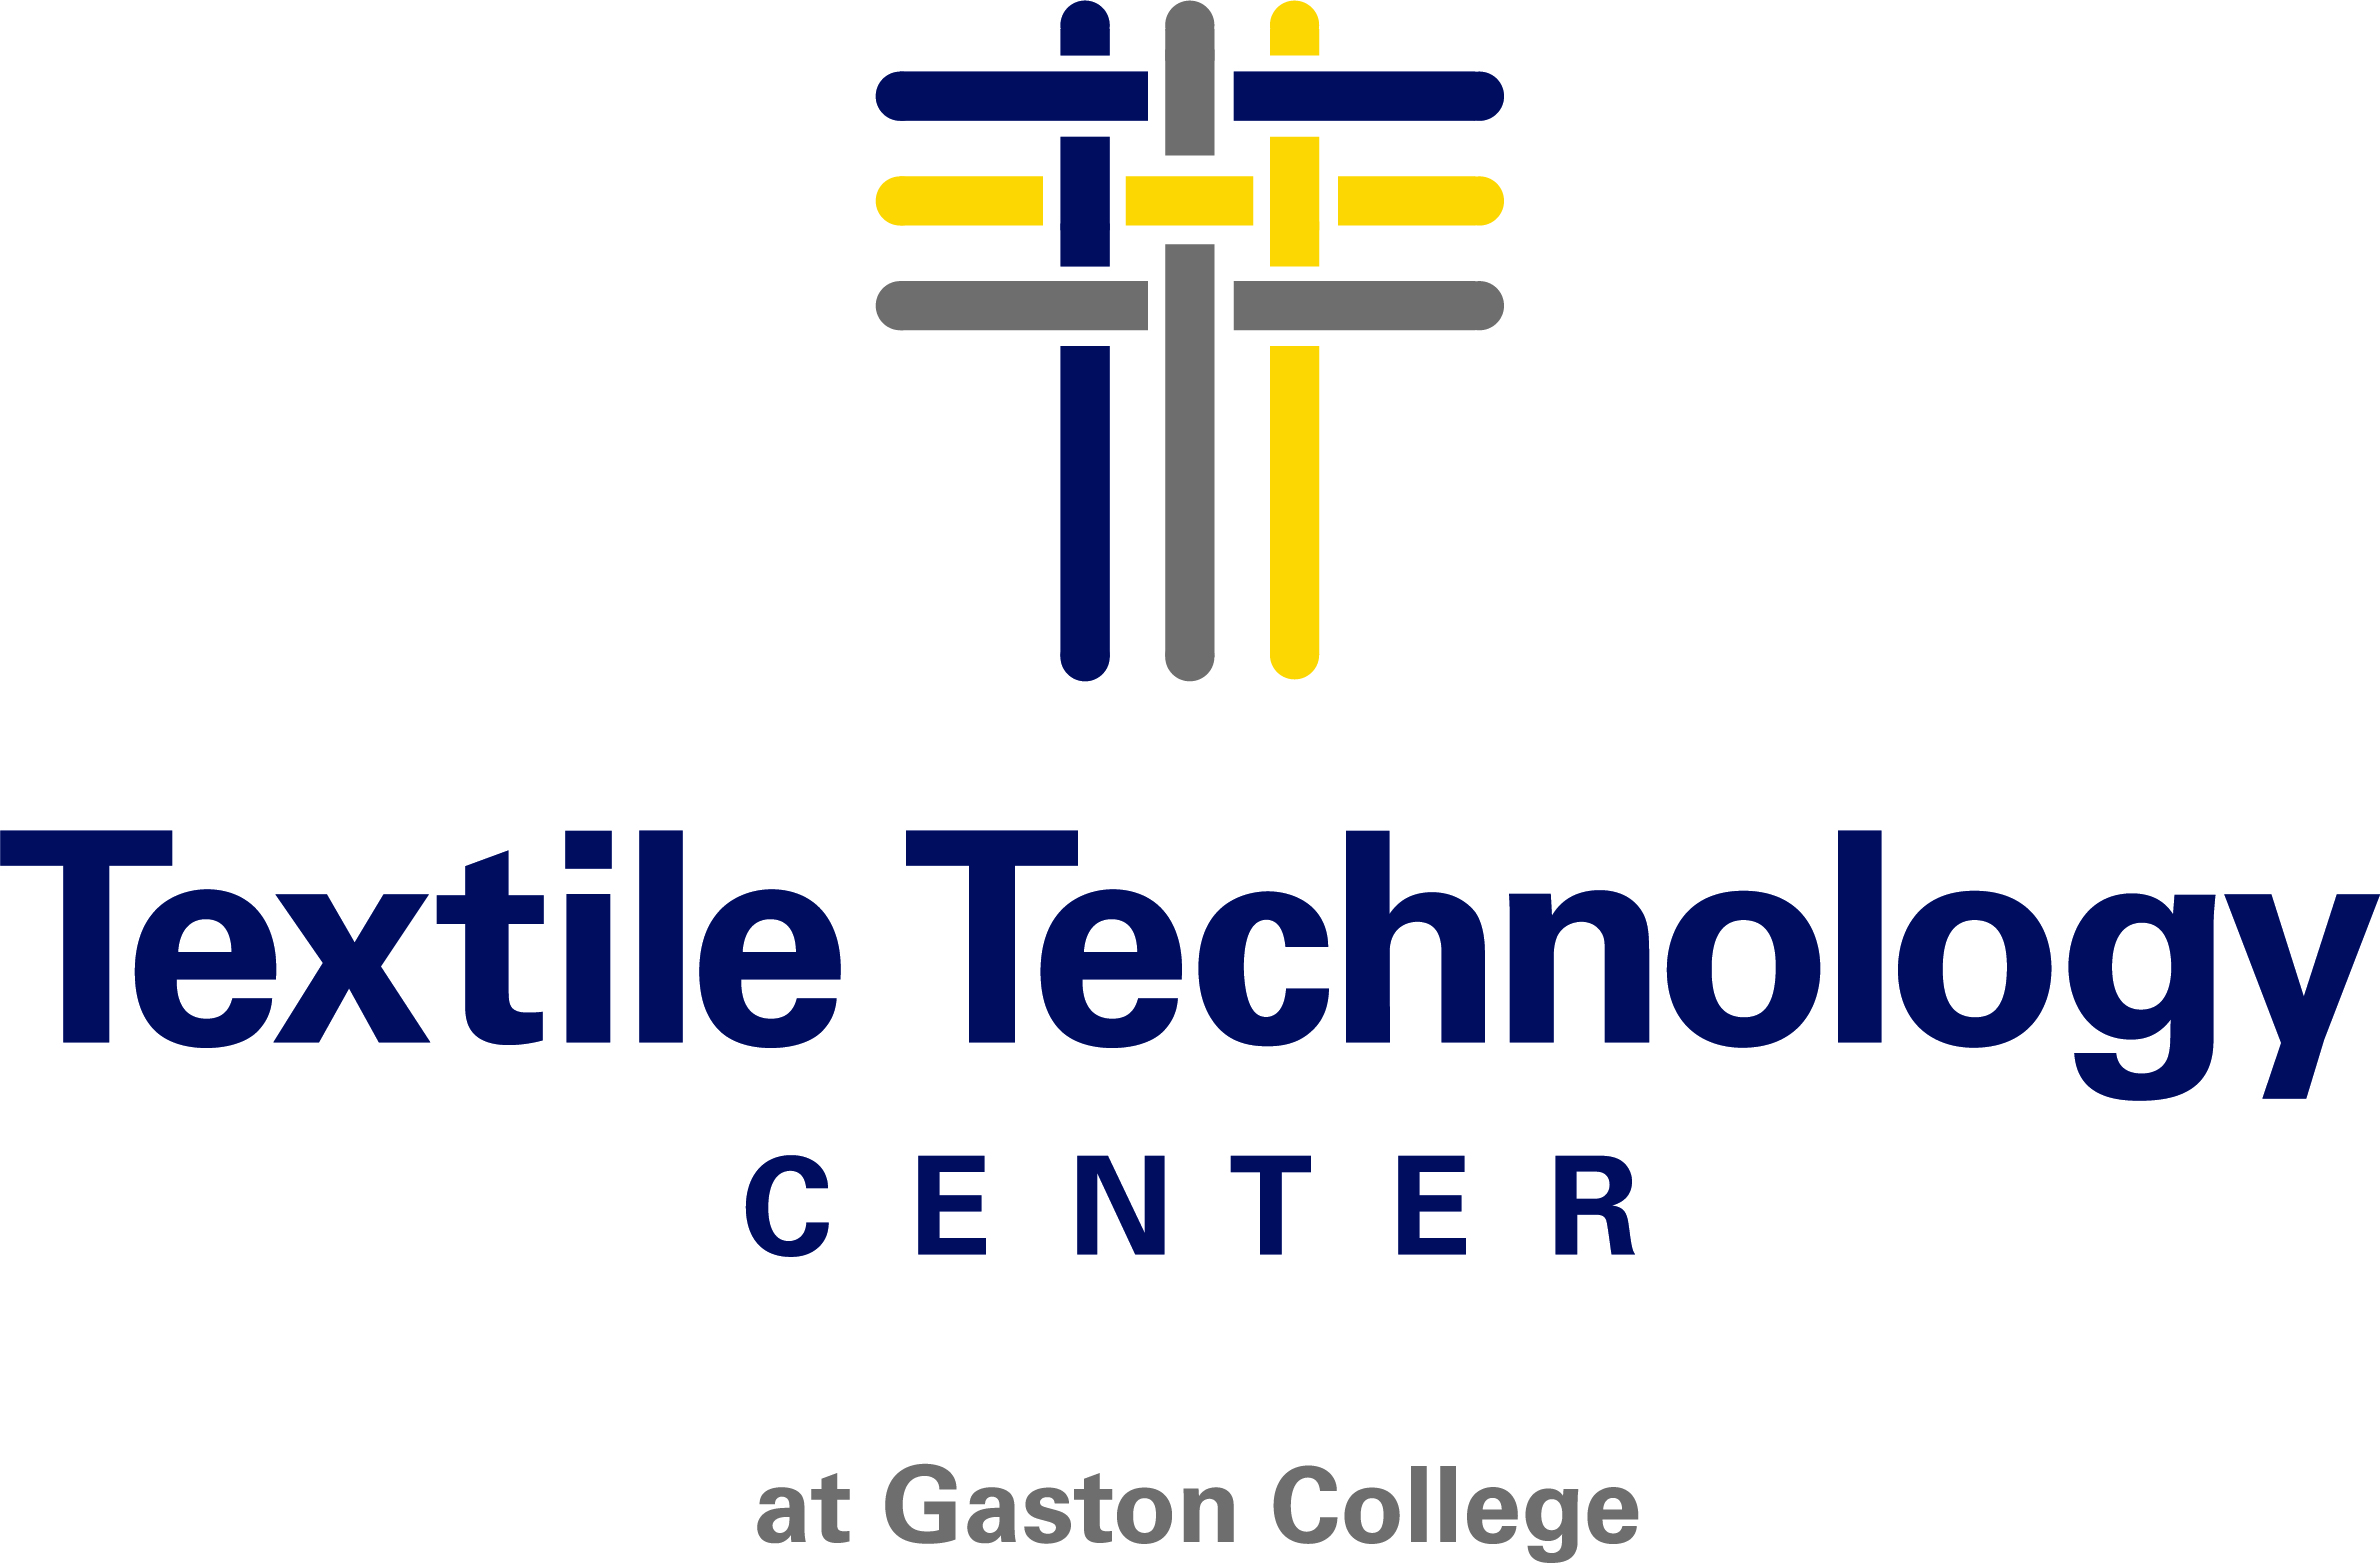 Textile Technology Center at Gaston College